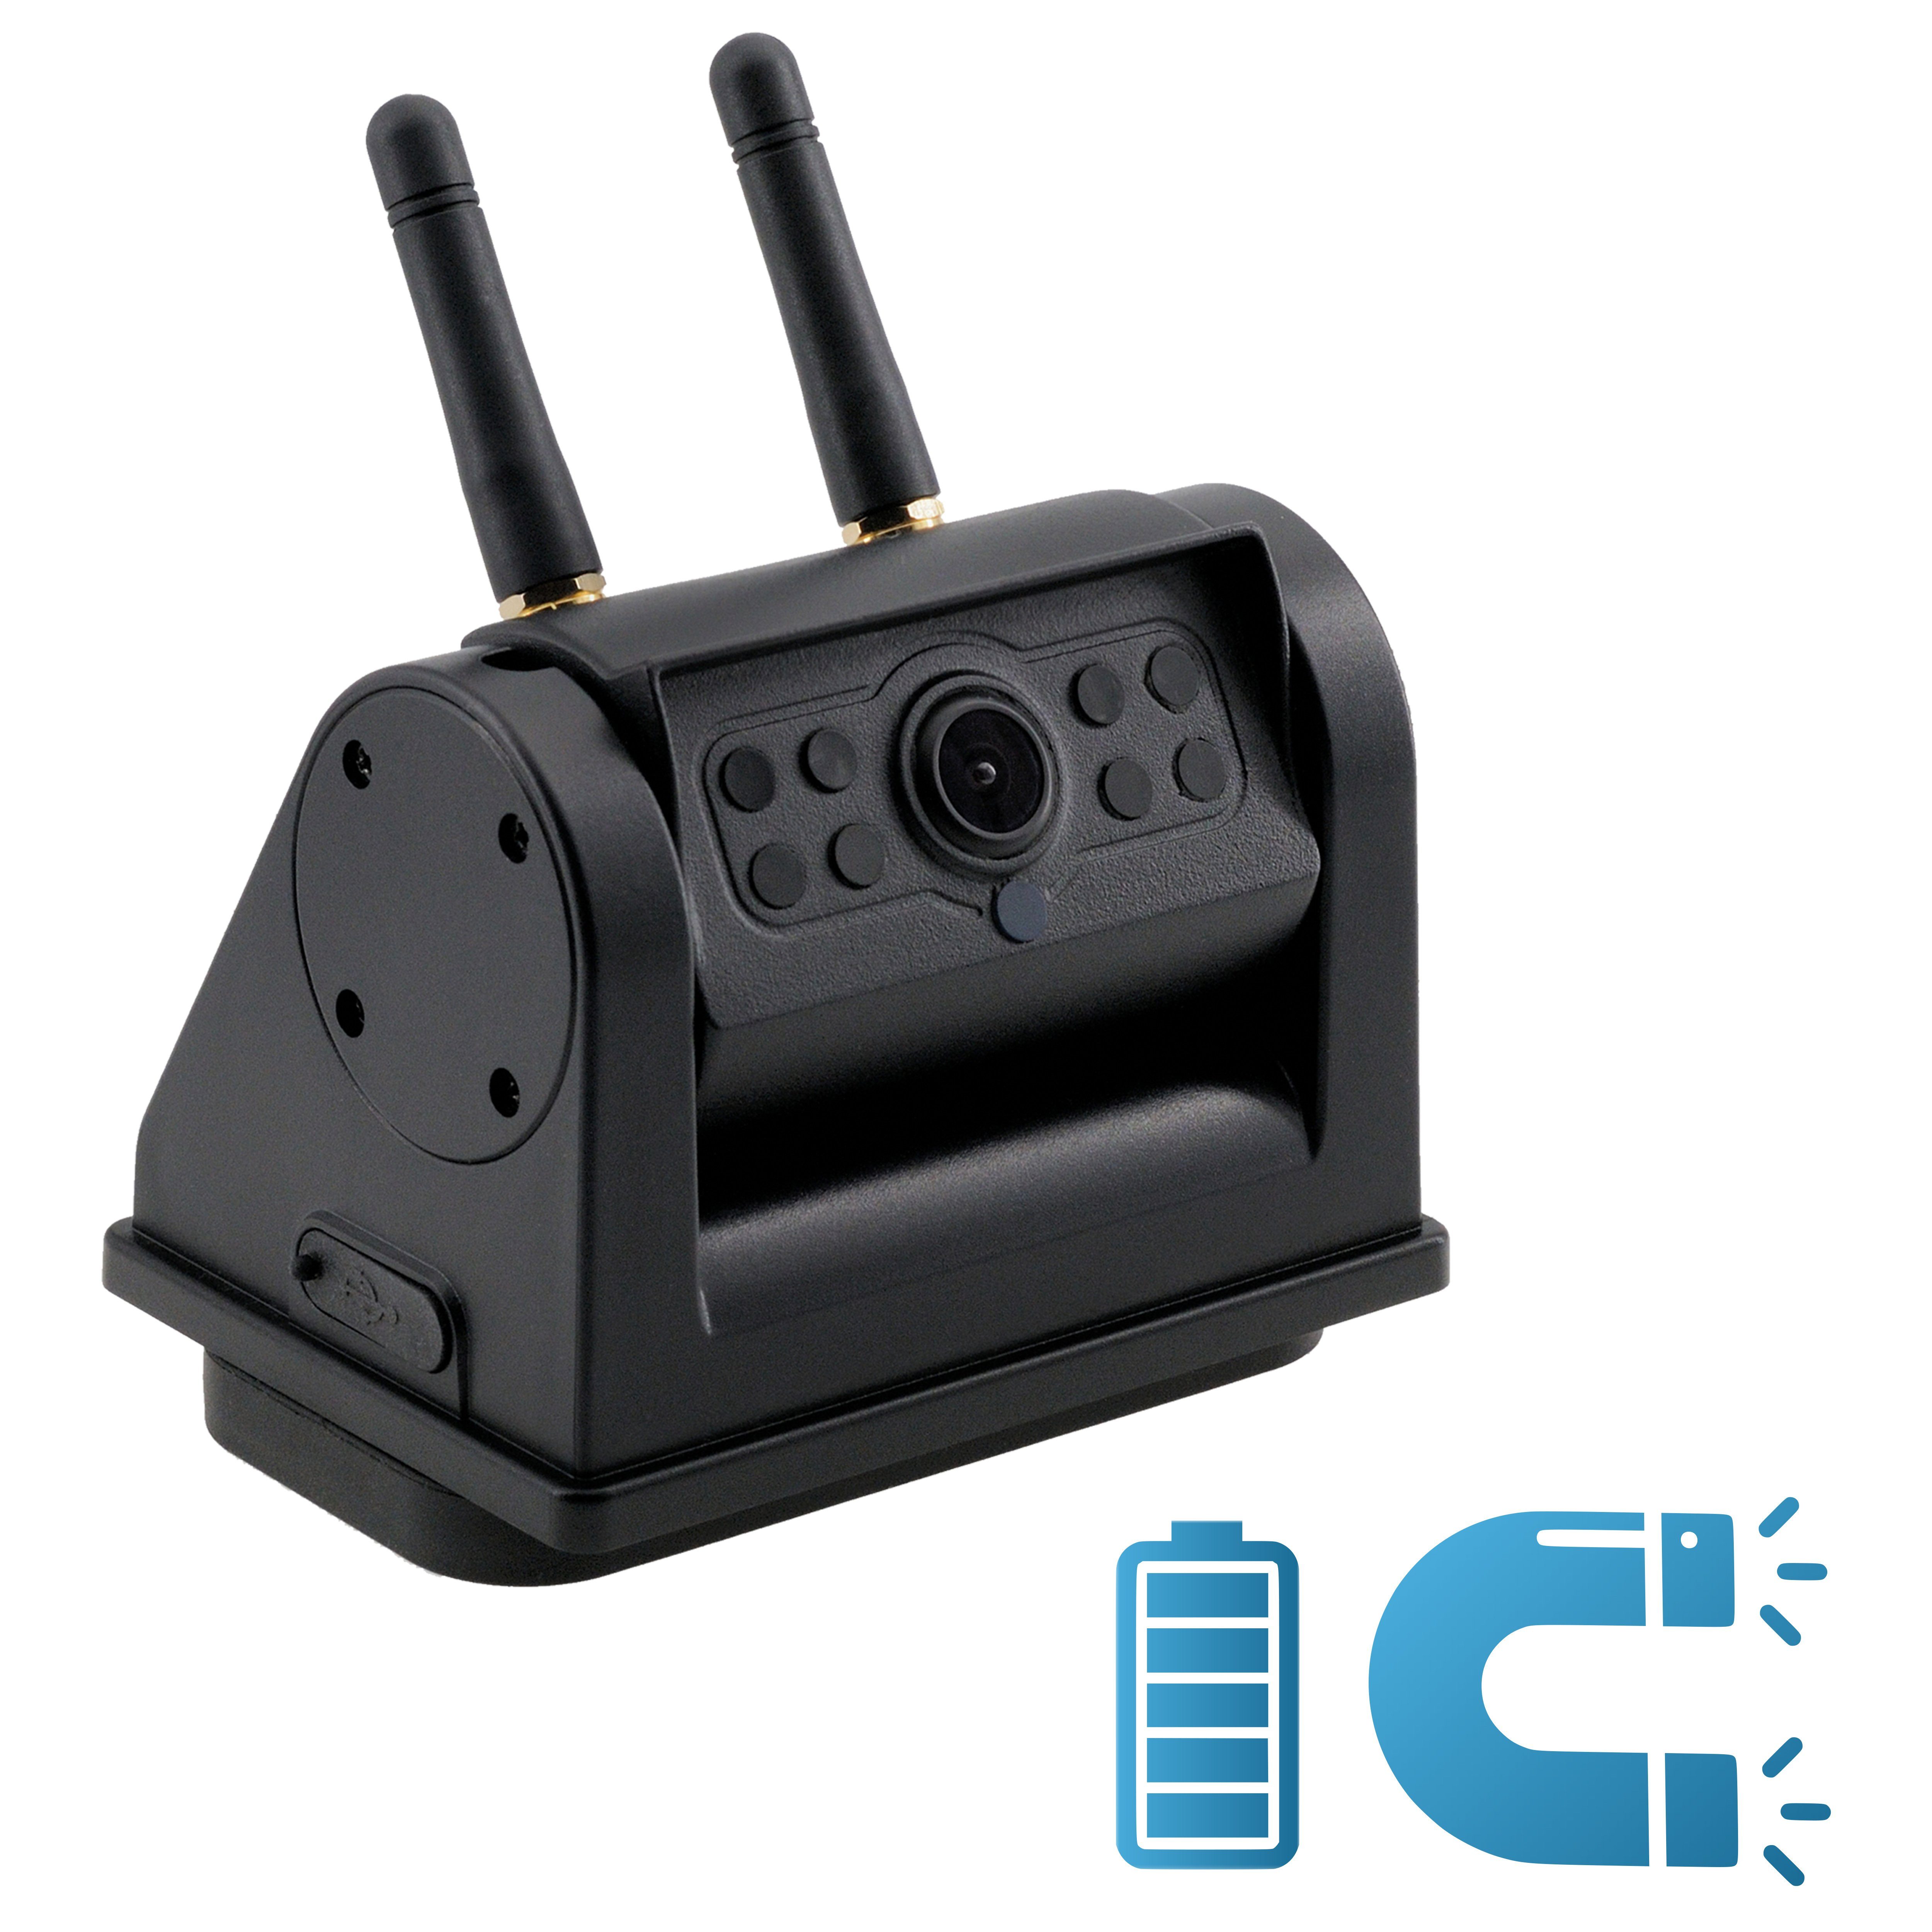 VSG24 7“ Element HD Funk Rückfahrsystem Akku Magnet Rückfahrkamera Rückfahrkamera (2,4 Ghz Digital, Rückfahrmonitor, Magnet-Kamera (s), Zubehör, Bedienungsanleitung)